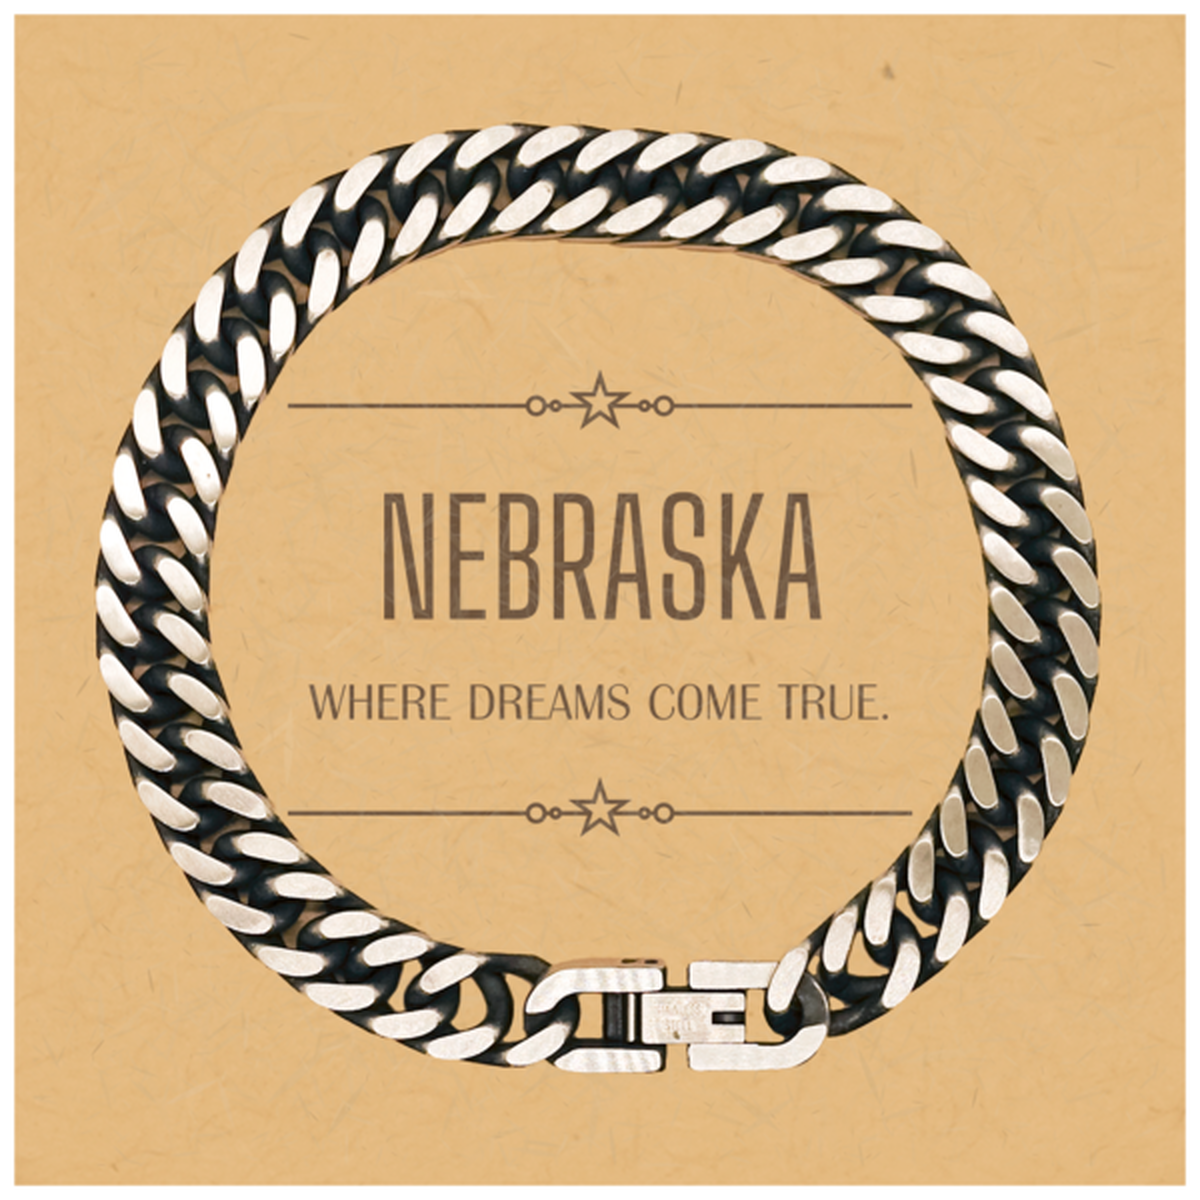 Love Nebraska State Cuban Link Chain Bracelet, Nebraska Where dreams come true, Birthday Christmas Inspirational Gifts For Nebraska Men, Women, Friends